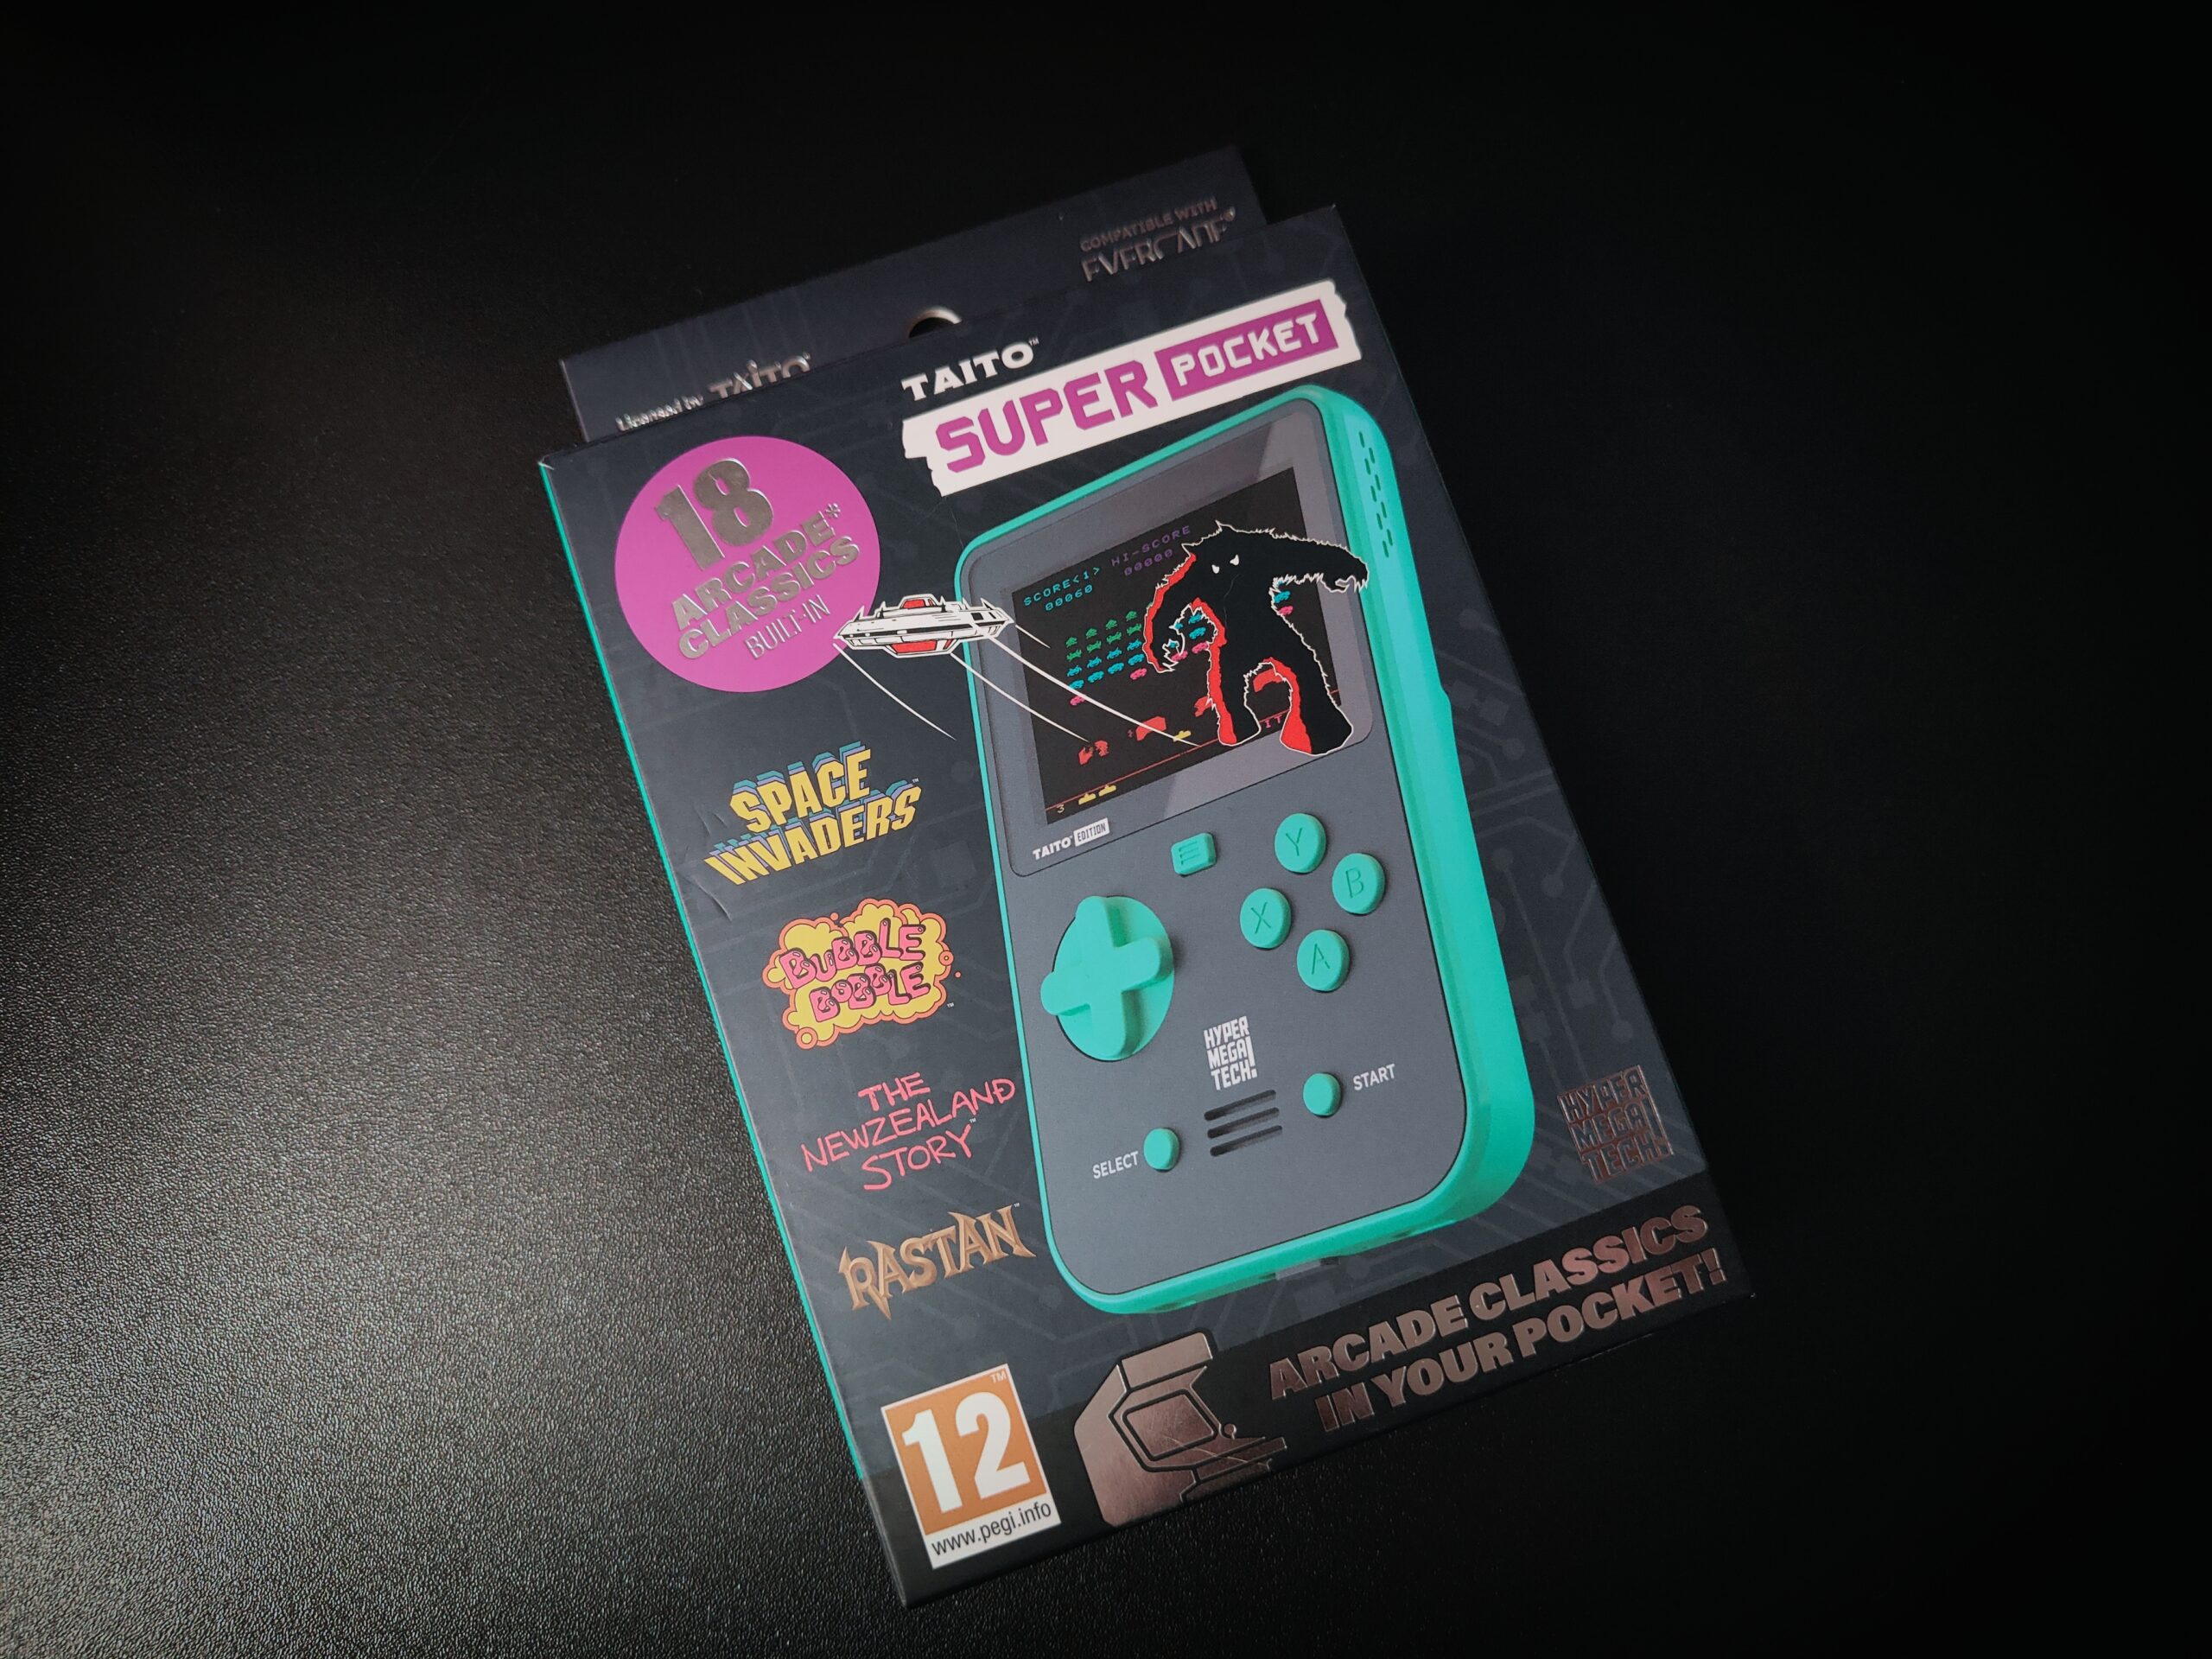 Hyper Mega Tech Super Pocket – recenzja konsoli – współczesny GameBoy